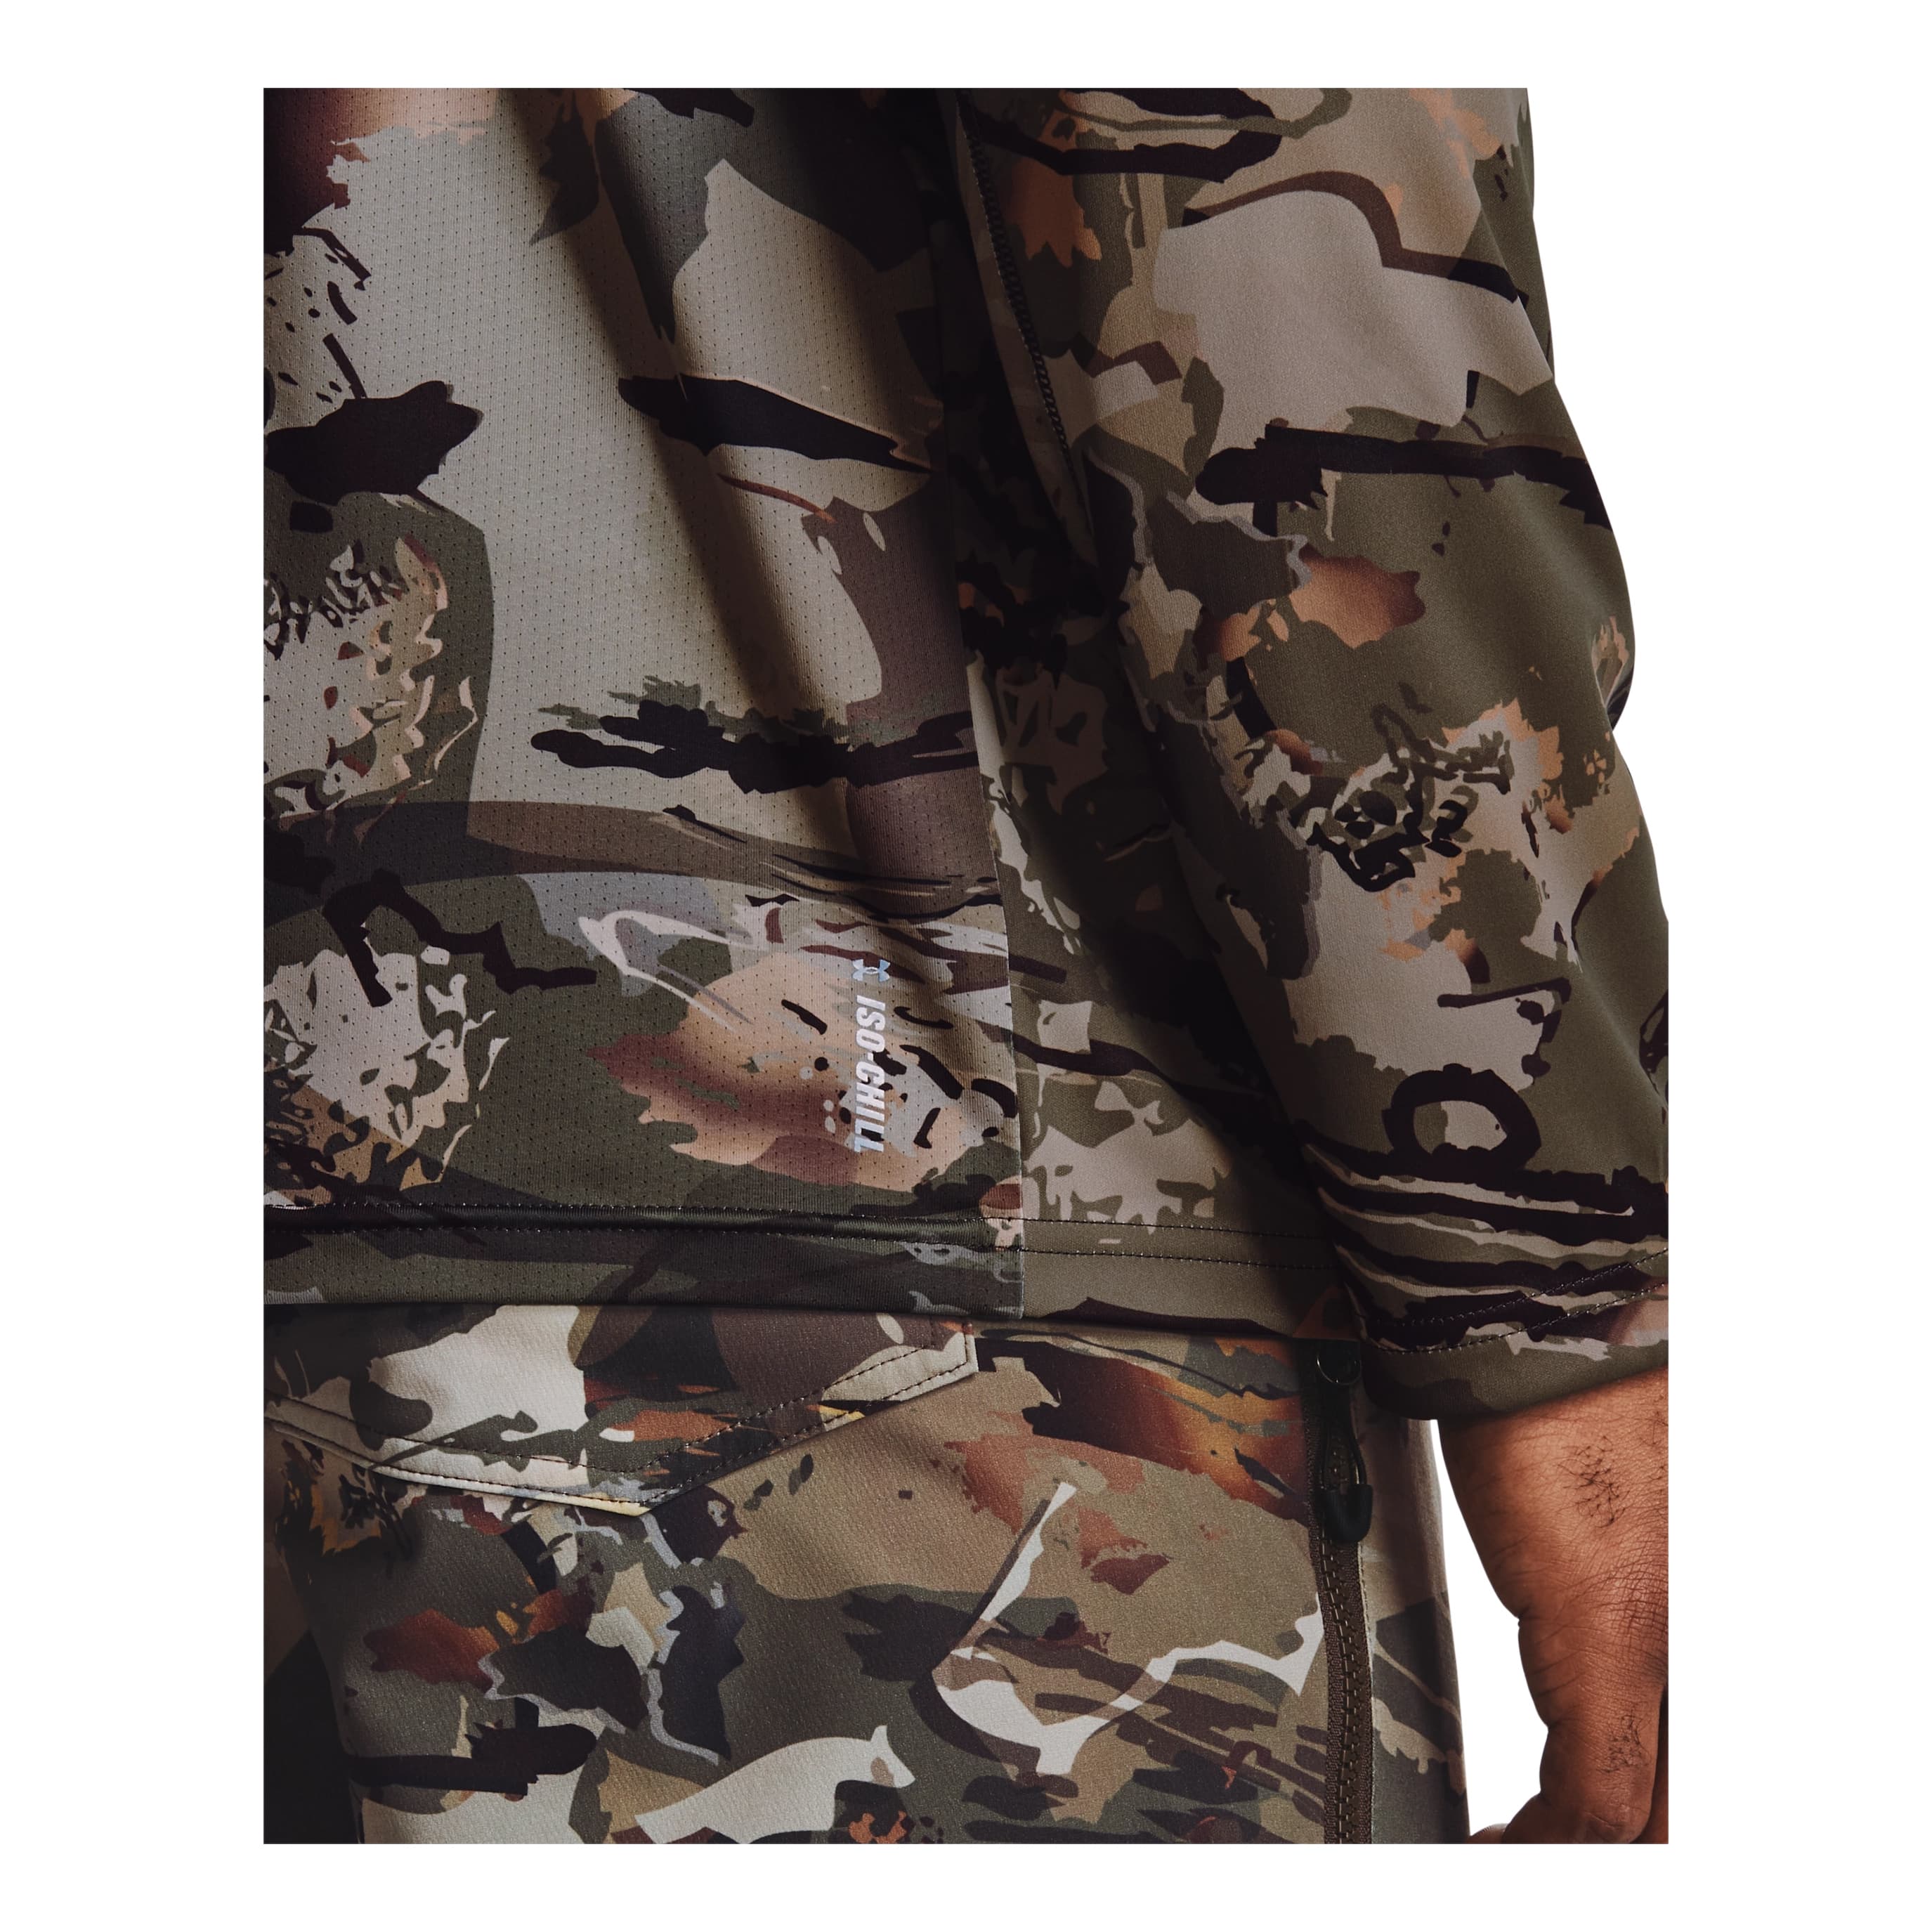 Under Armour® Men’s Iso-Chill Brush Line Long-Sleeve Shirt - UA Forest/Black